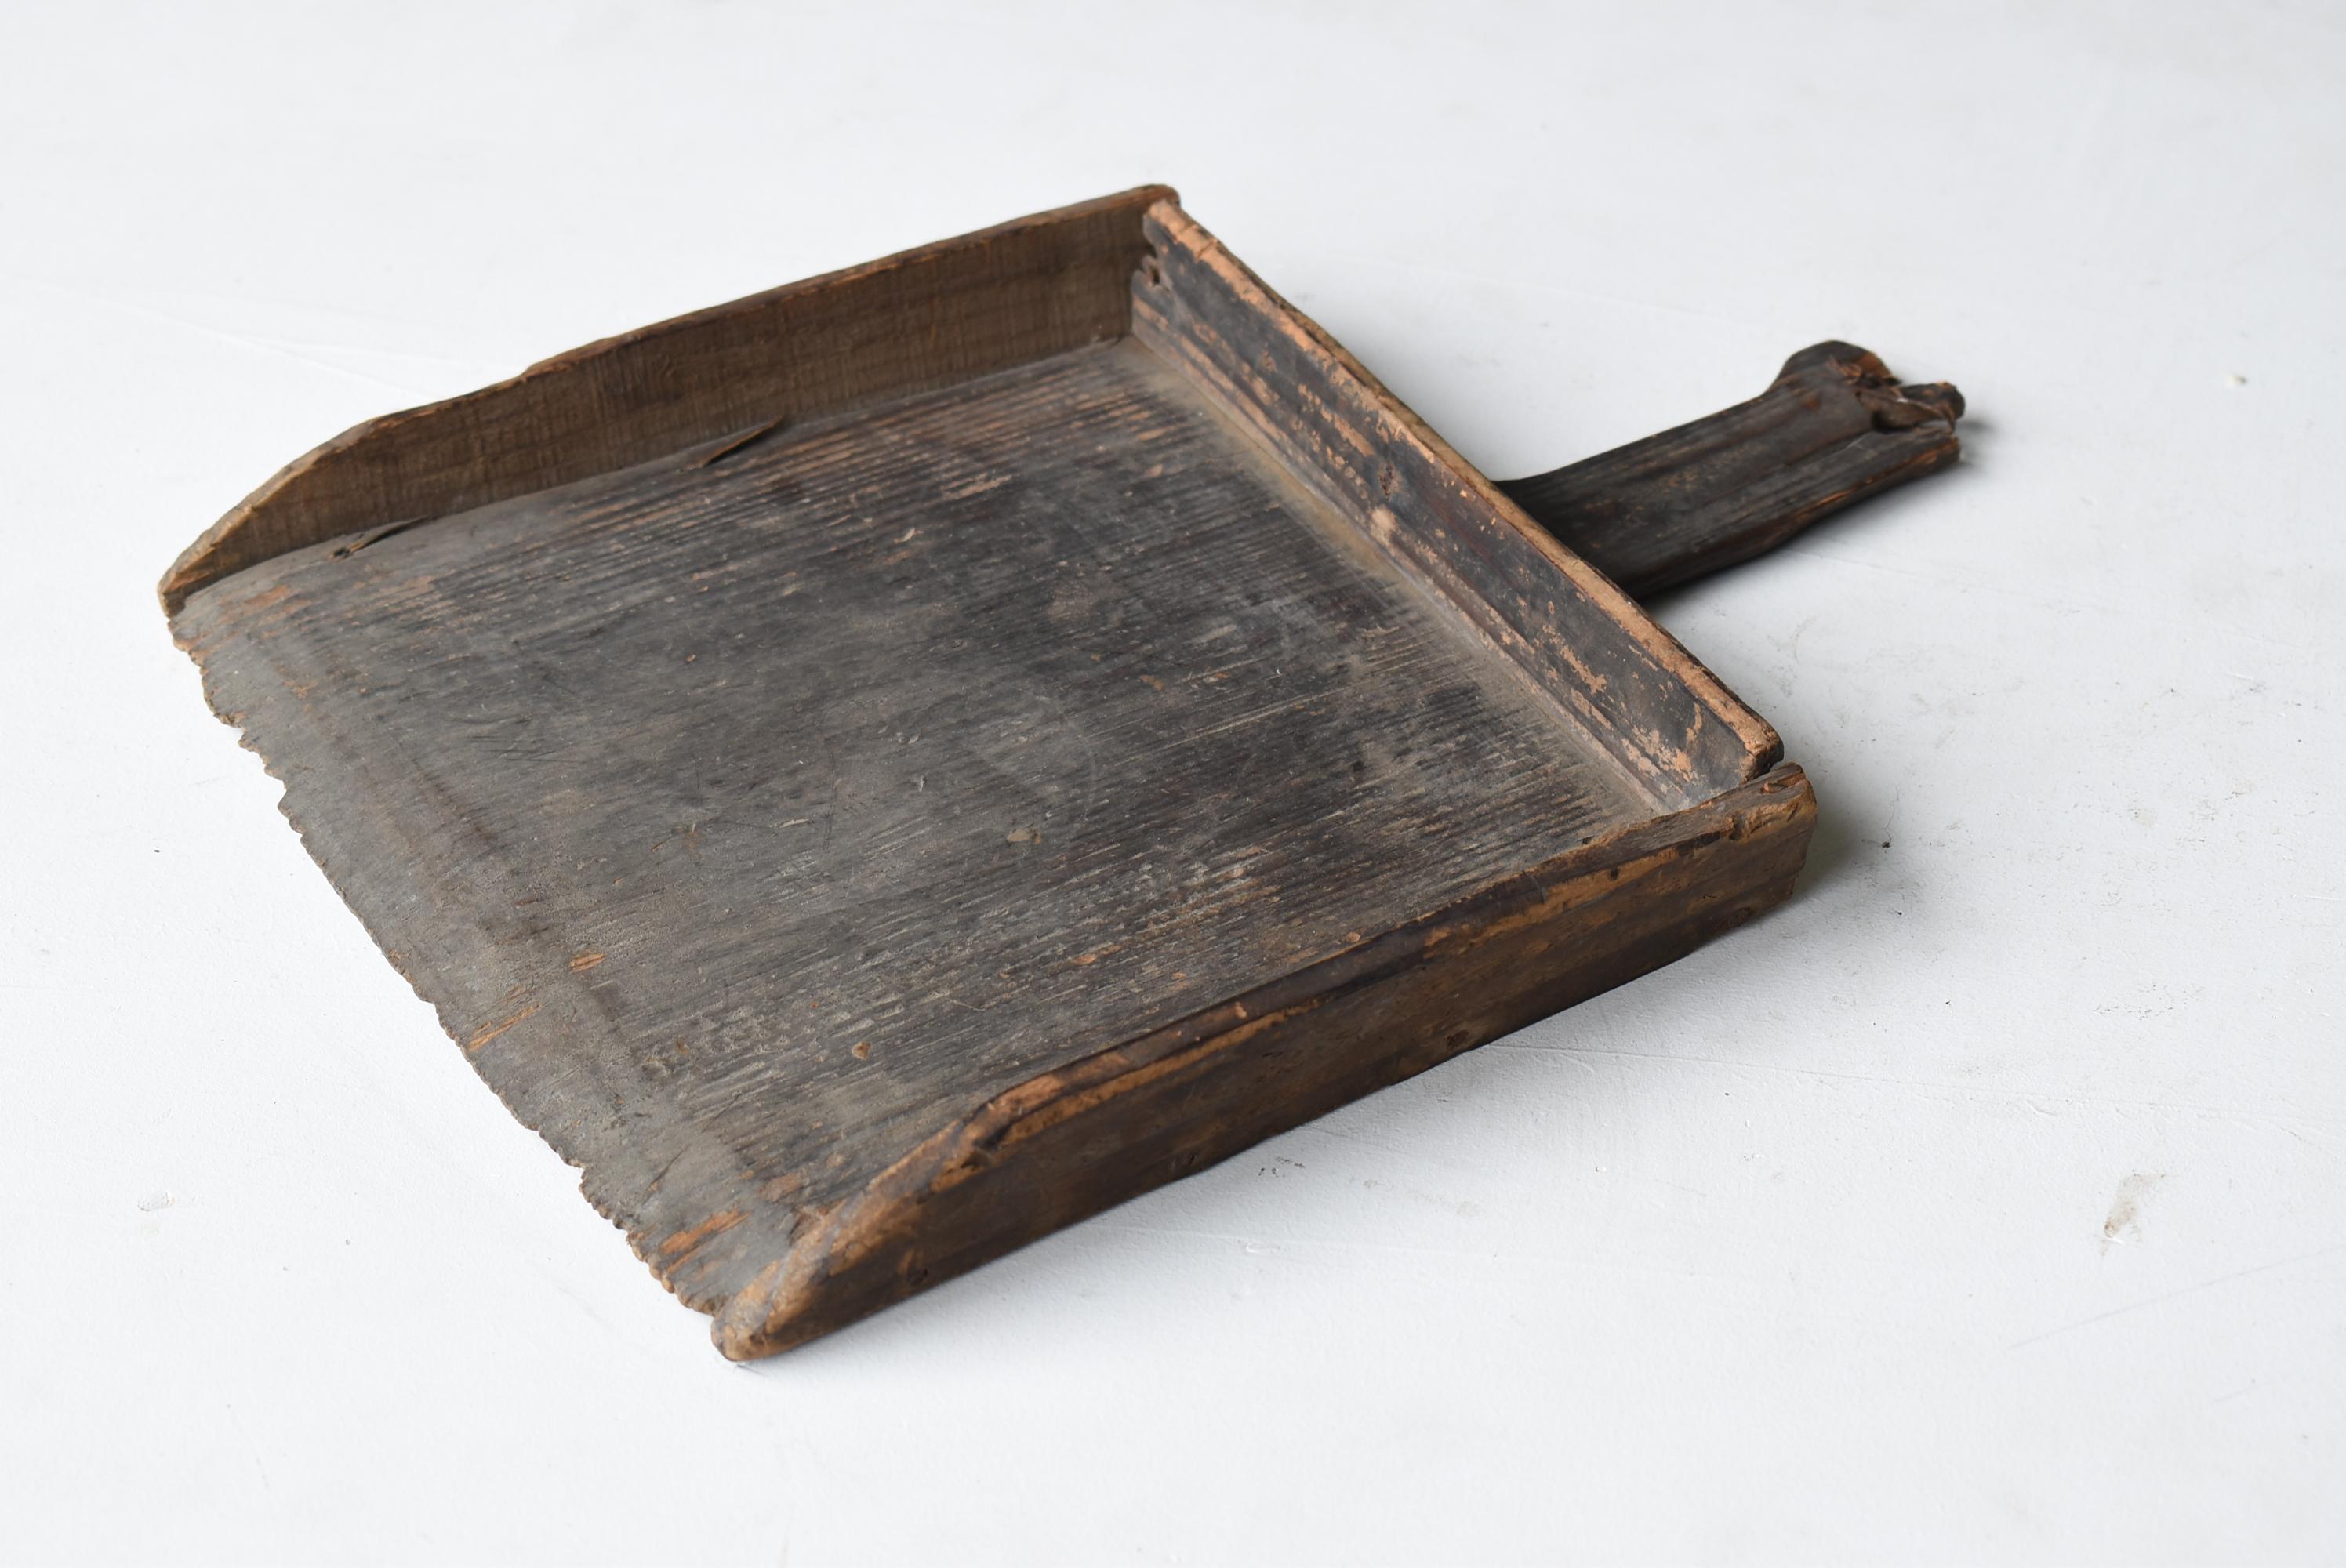 Taisho Japanese Antique Wabi Sabi Art Dustpan 1910s-1920s / Object Contemporary Art For Sale